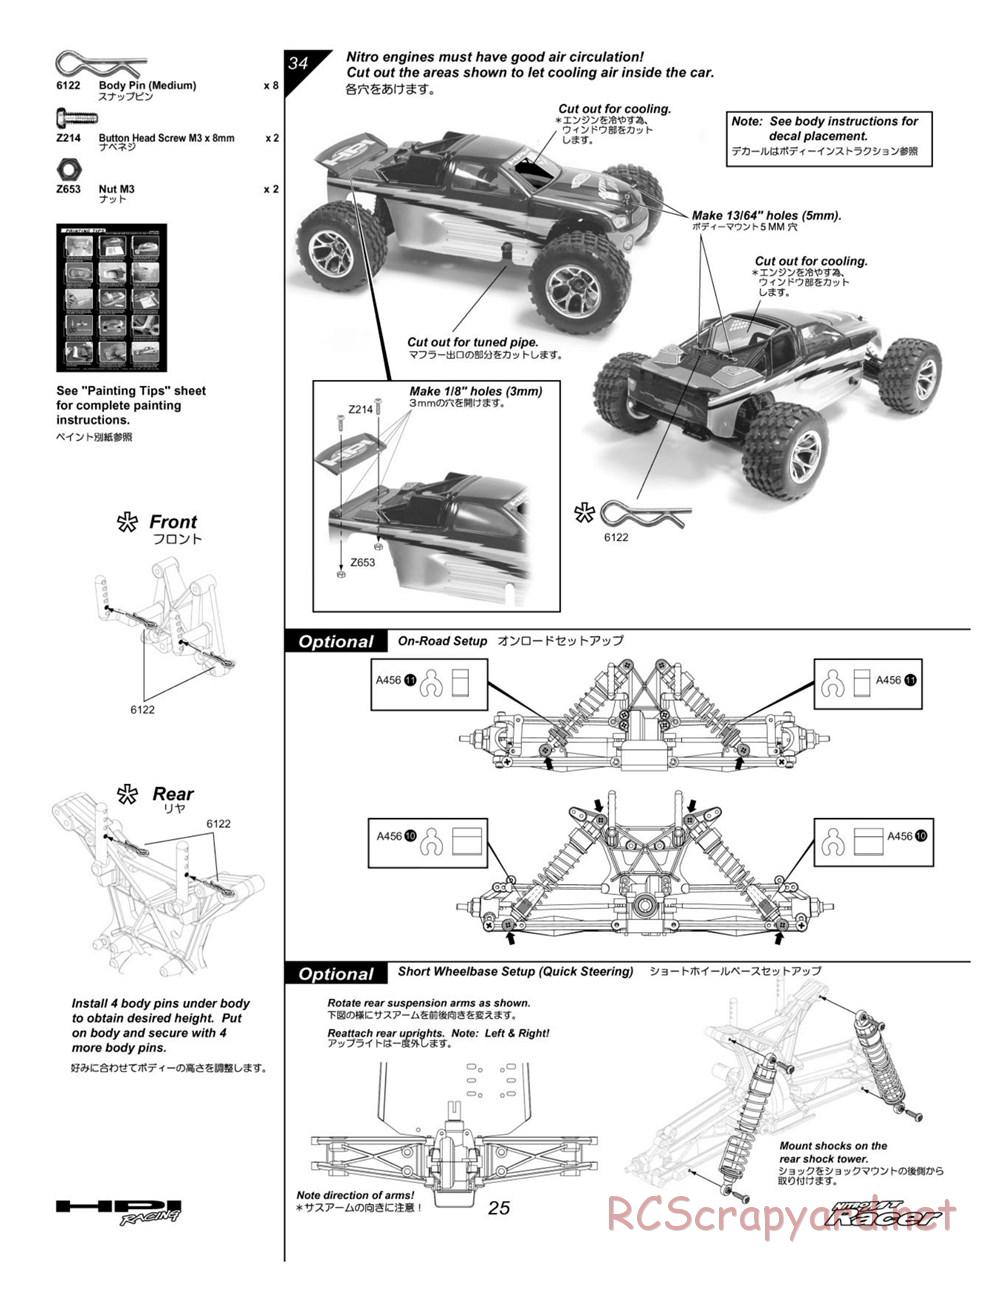 HPI - Nitro MT Racer - Manual - Page 25